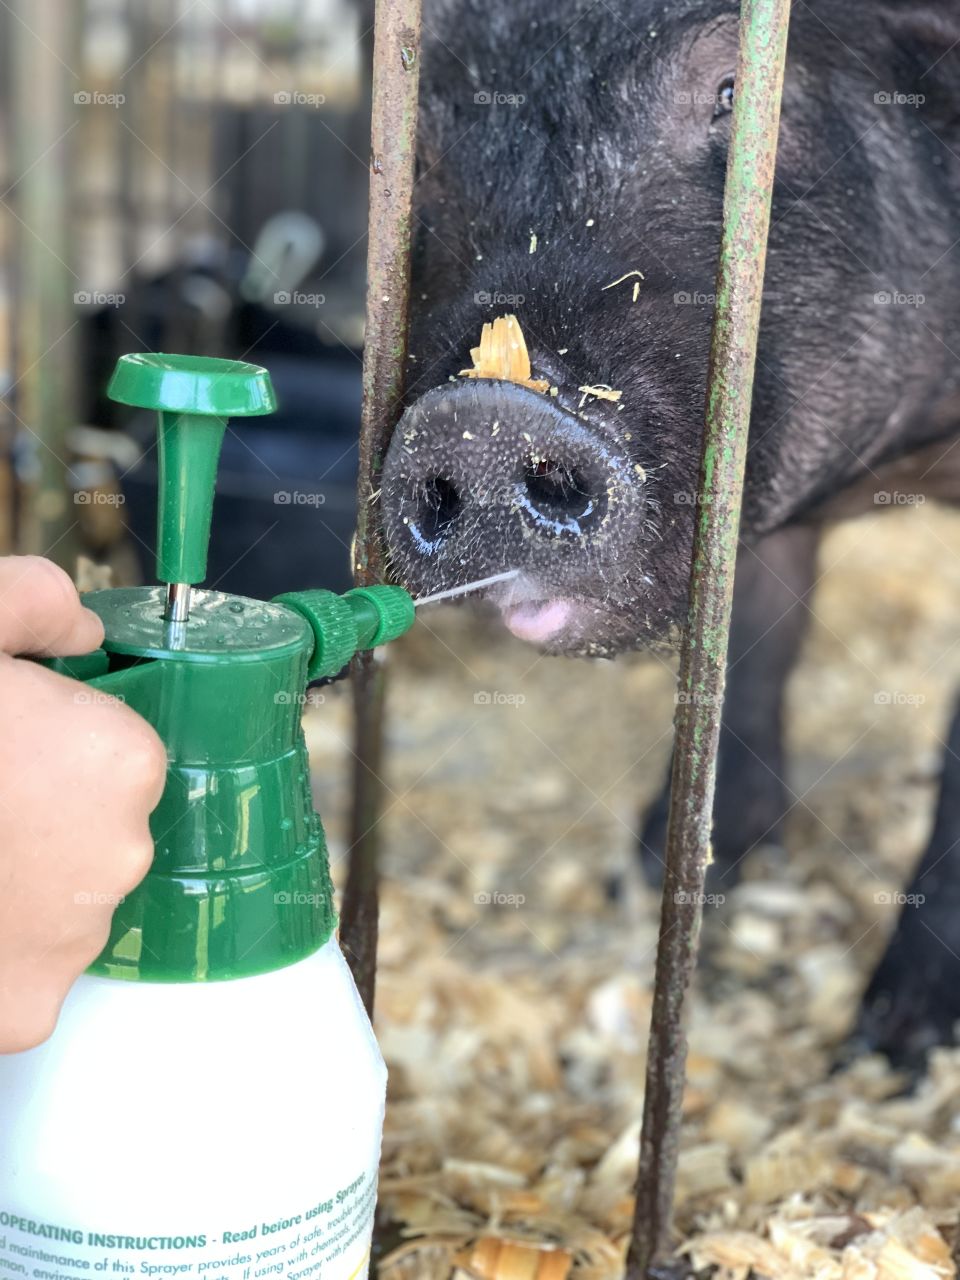 4H fair watering the pig